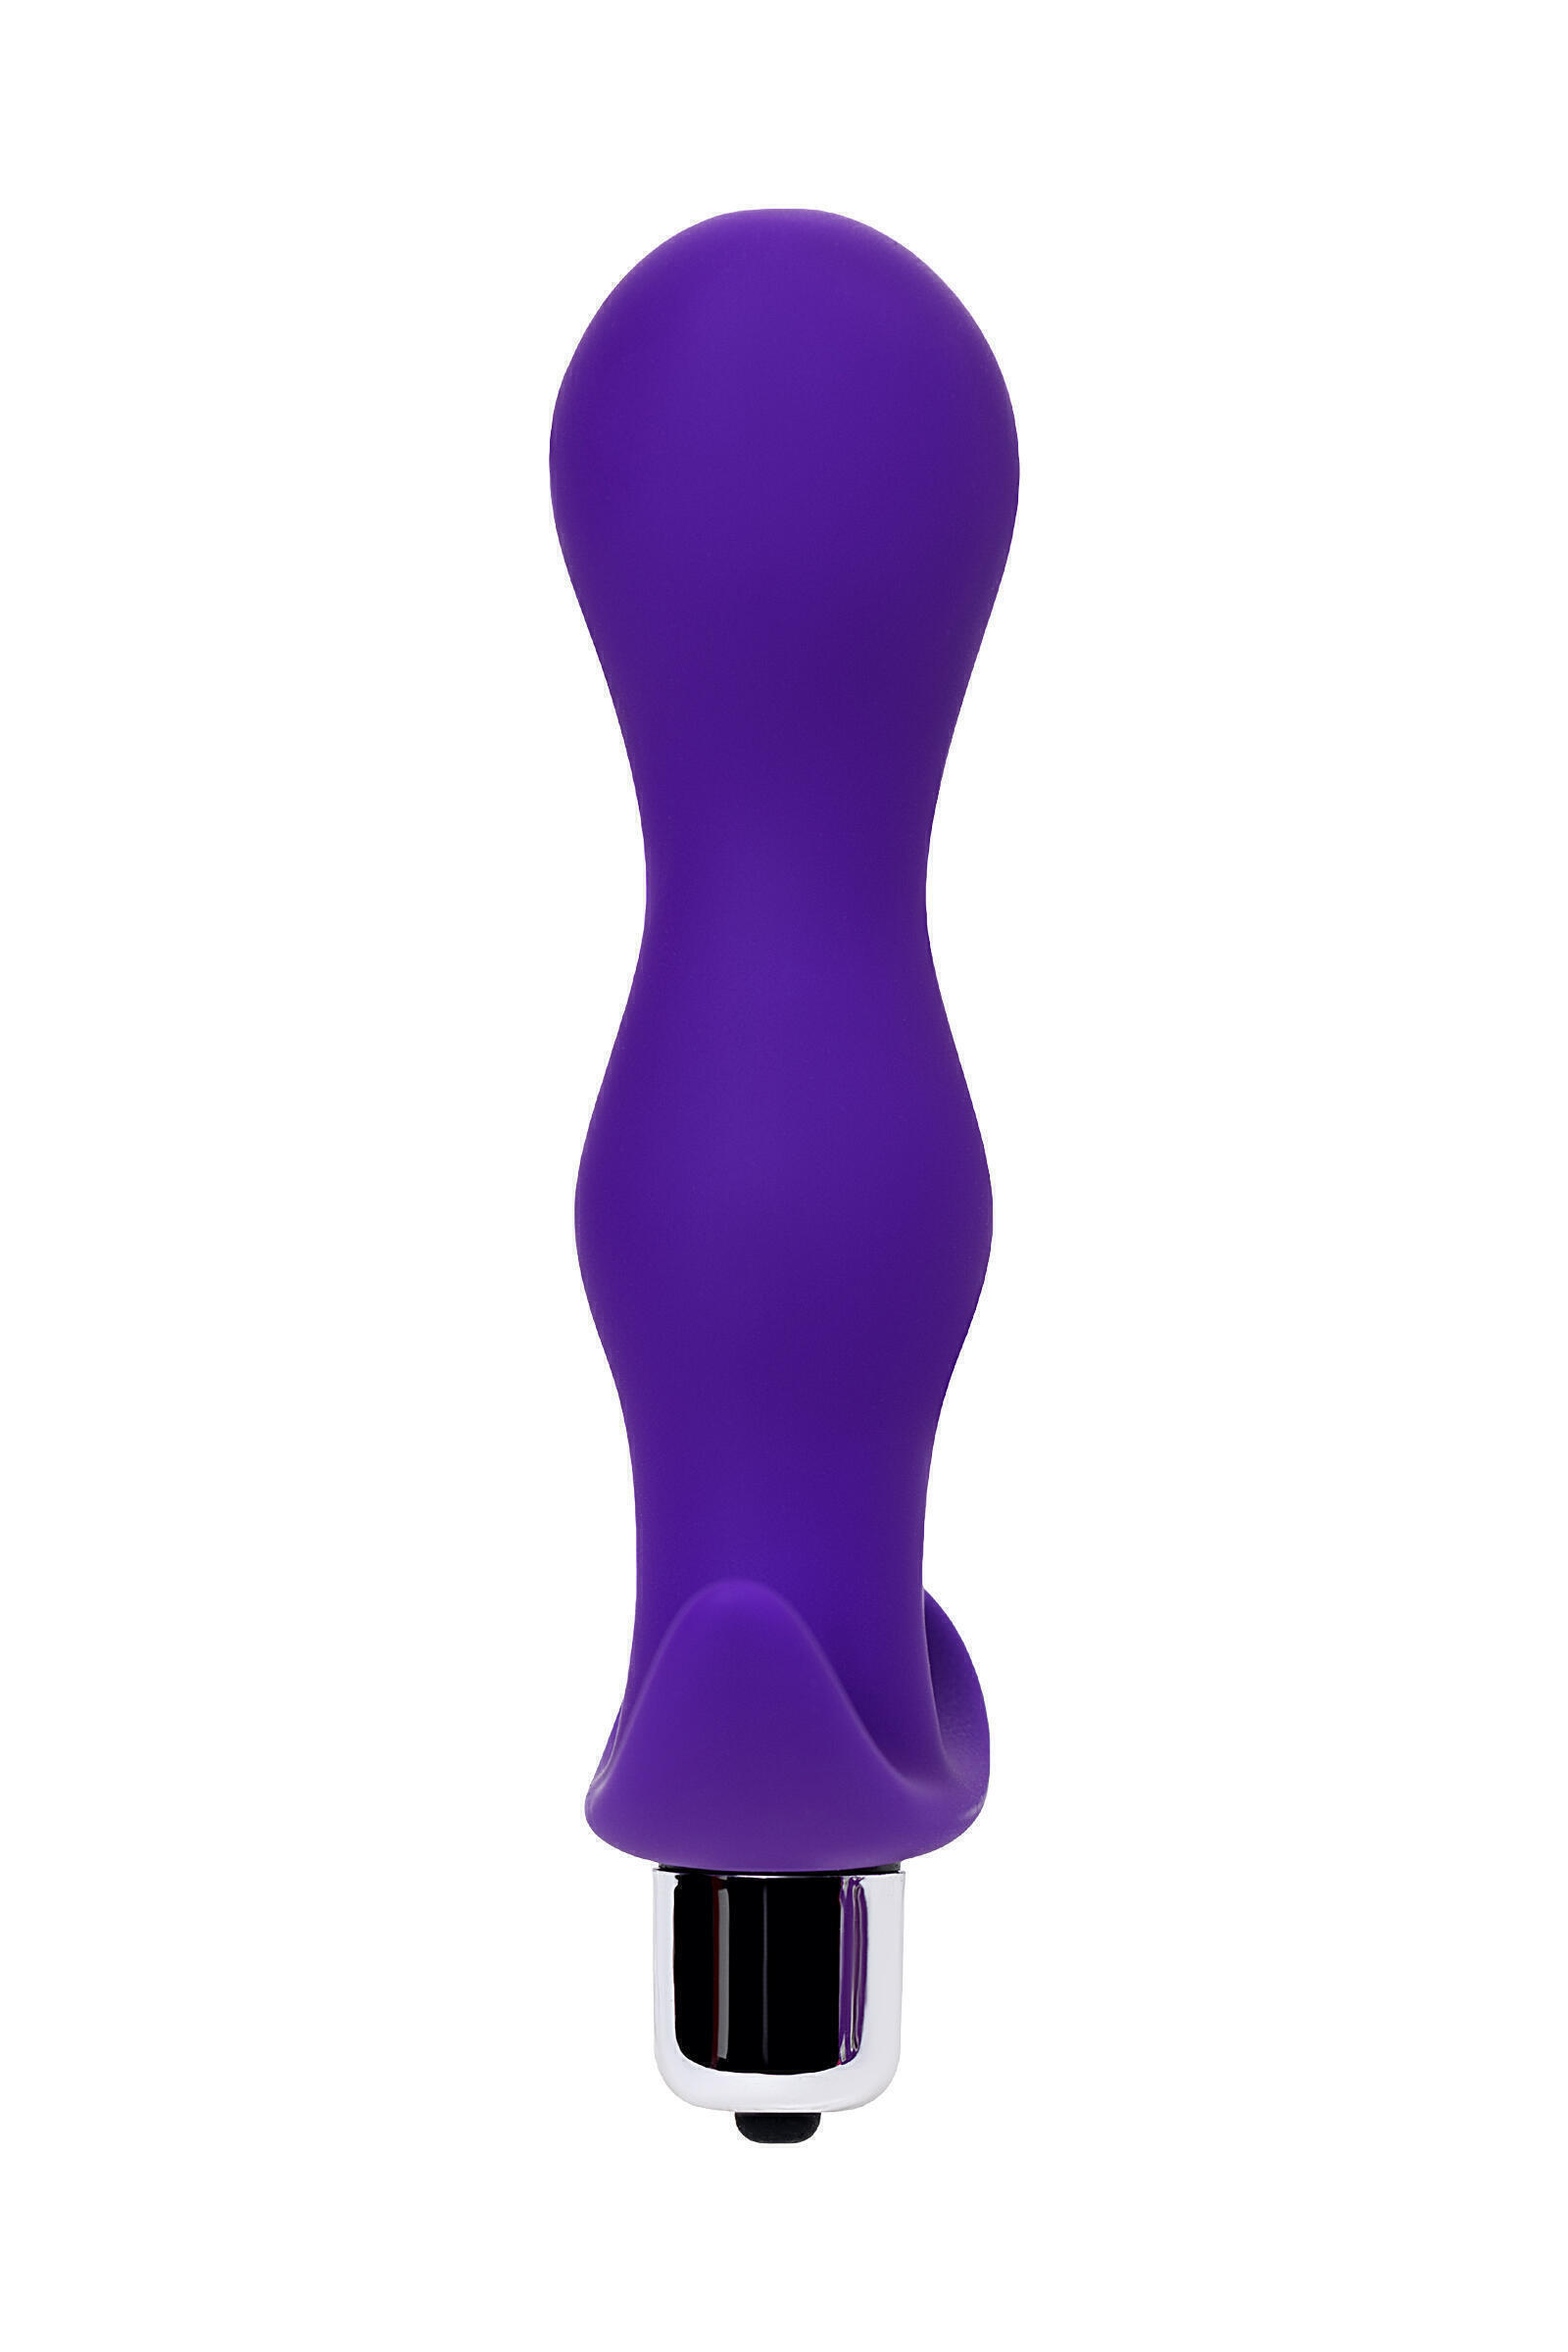 Анальная пробка с вибрацией A-Toys by Toyfа L, фиолетовая